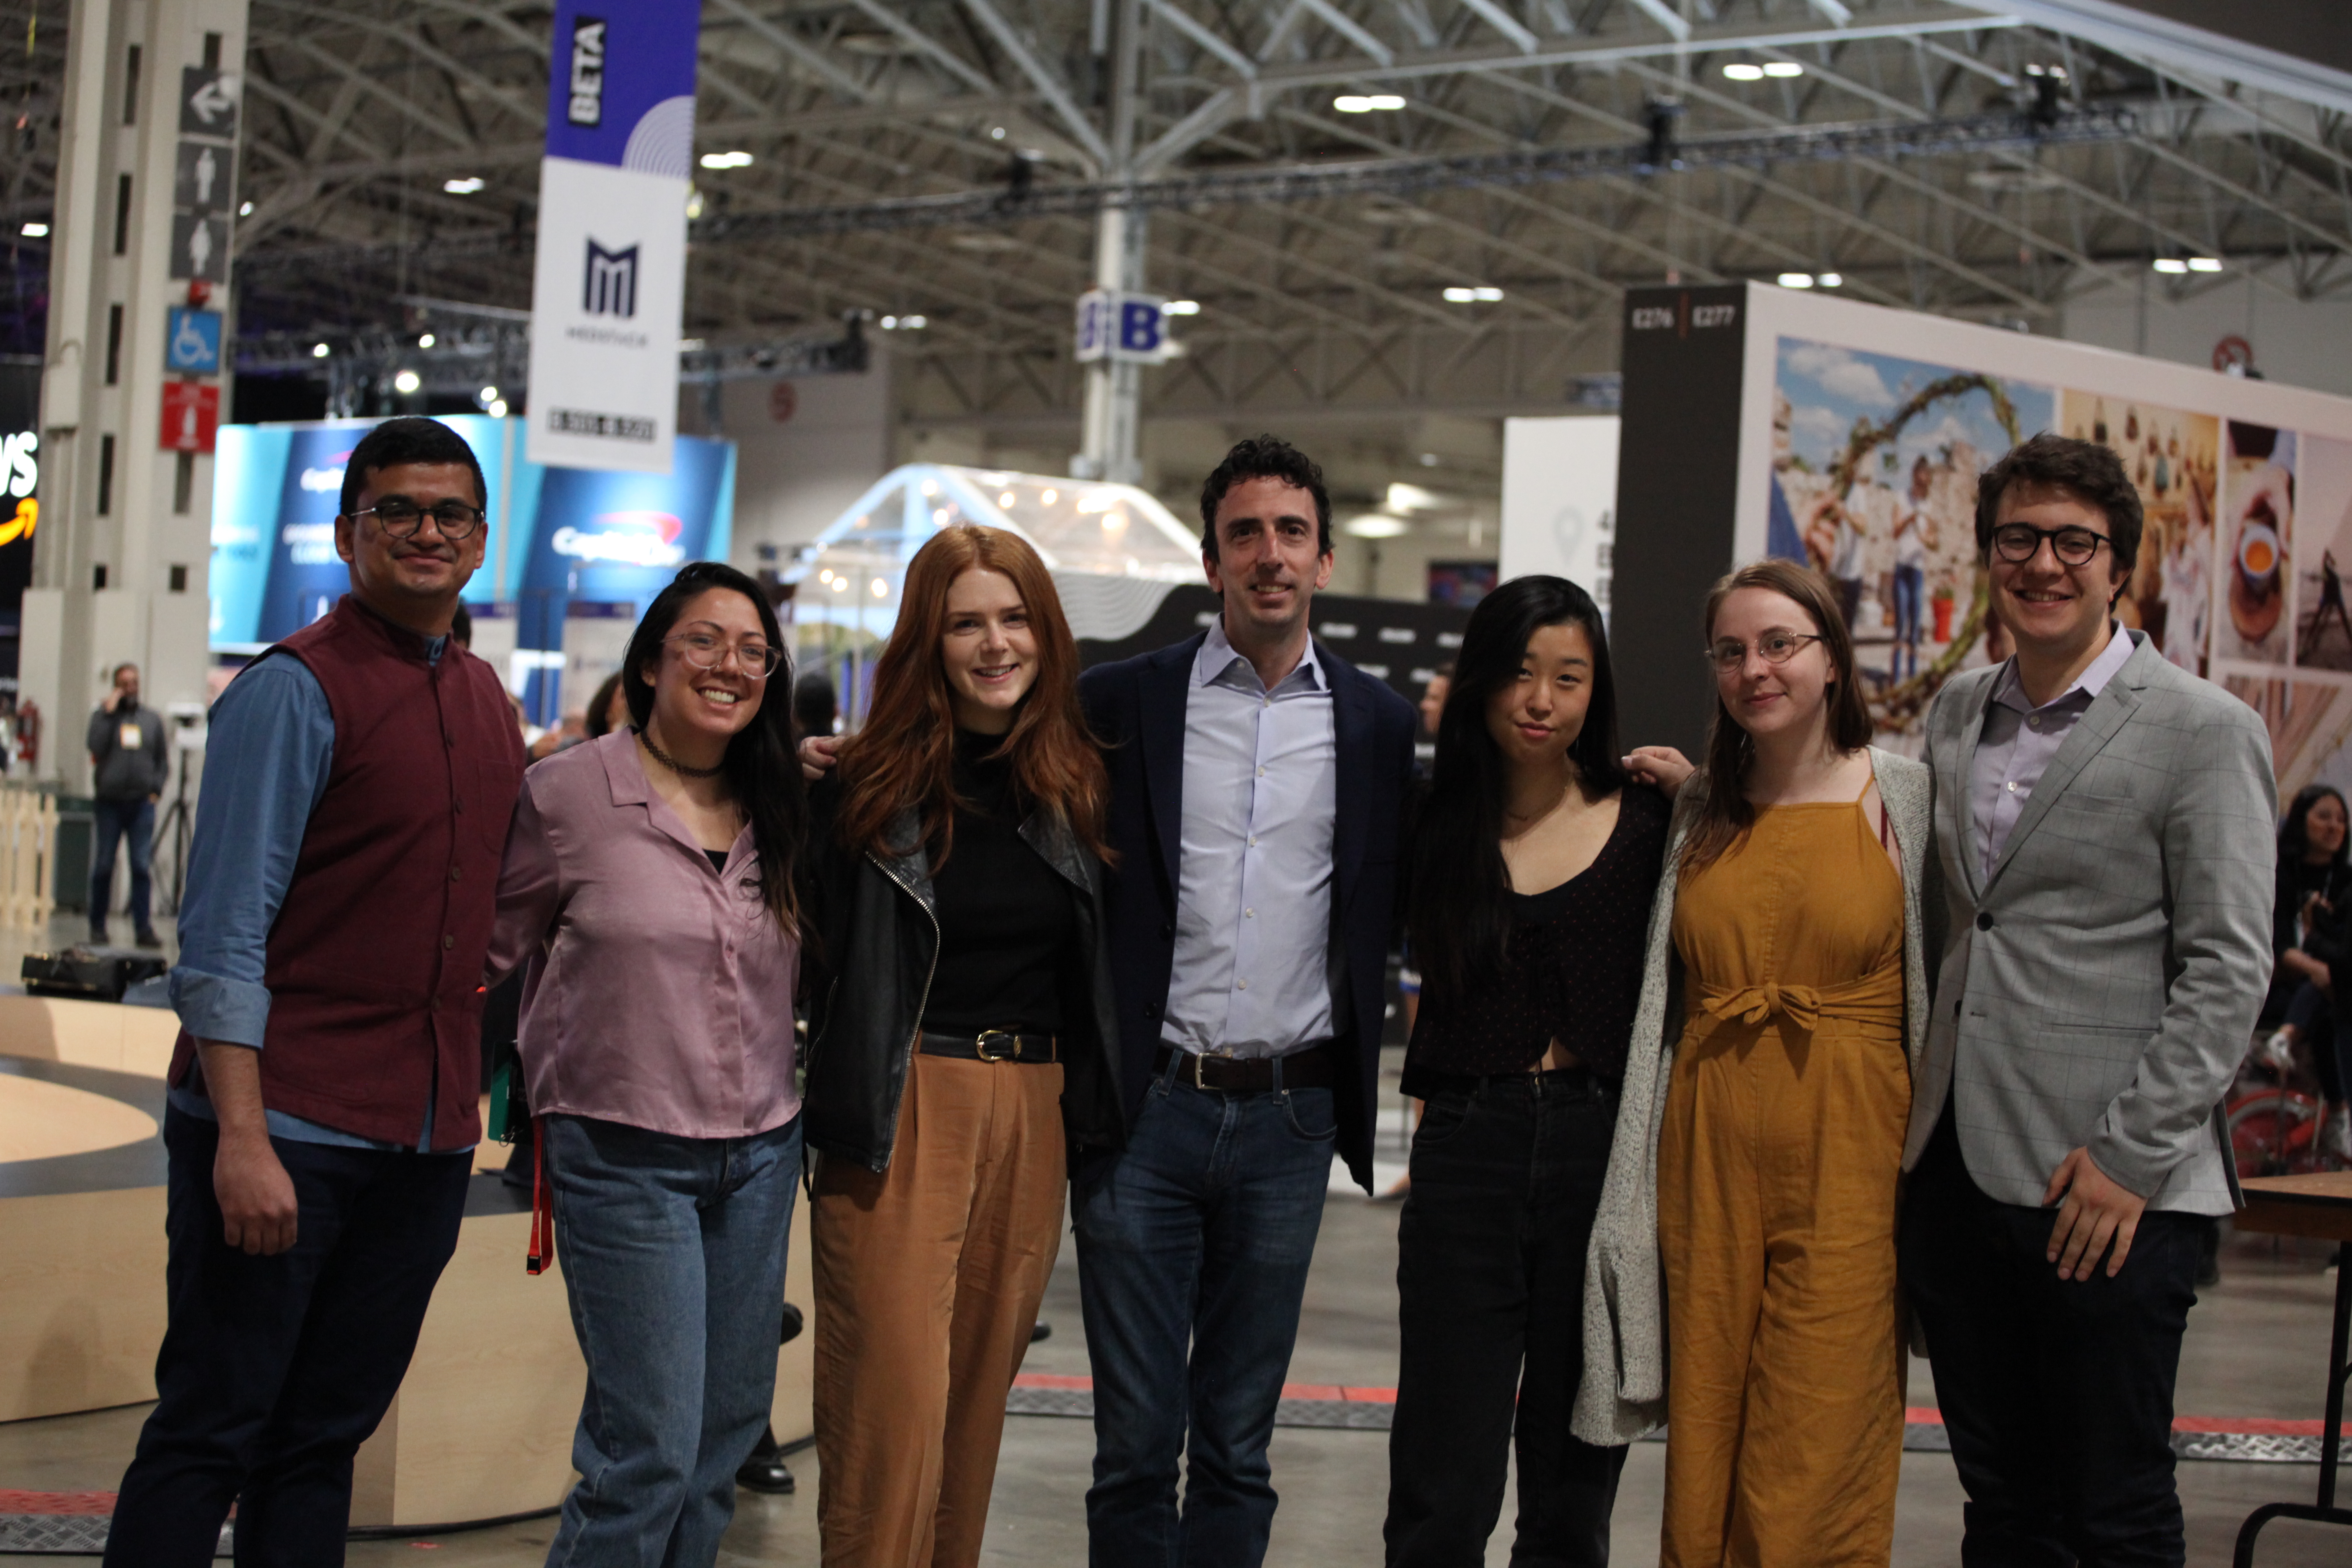 The Logic team at Toronto’s Collision Tech Conference in May 2019. From left: Murad Hemmadi, Jessica Galang, Catherine McIntyre, David Skok, Hanna Lee, Amanda Roth, and Zane Schwartz